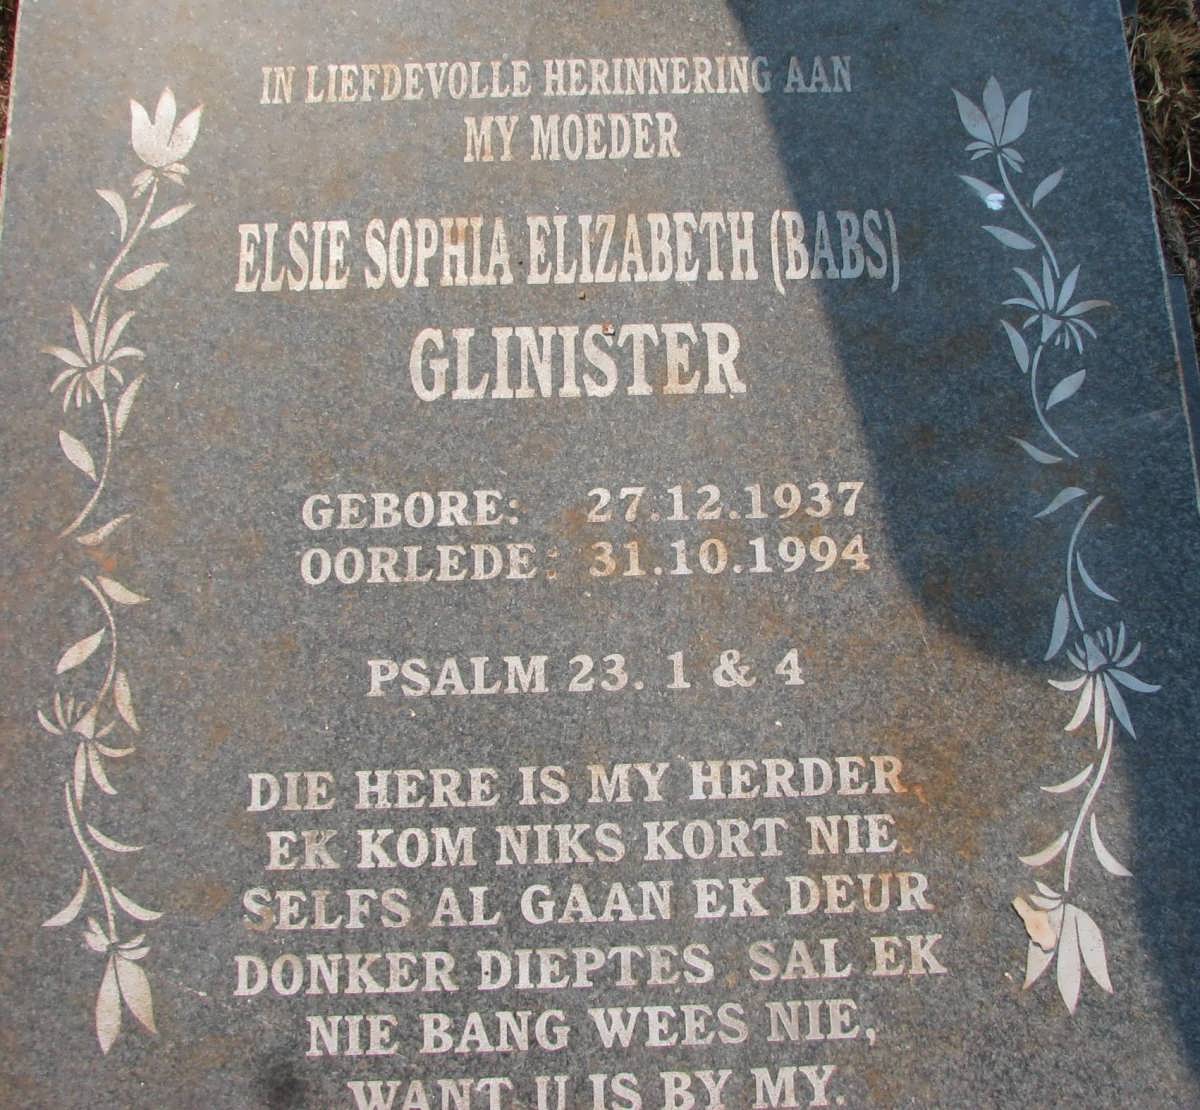 GLINISTER Elsie Sophia Elizabeth 1937-1994